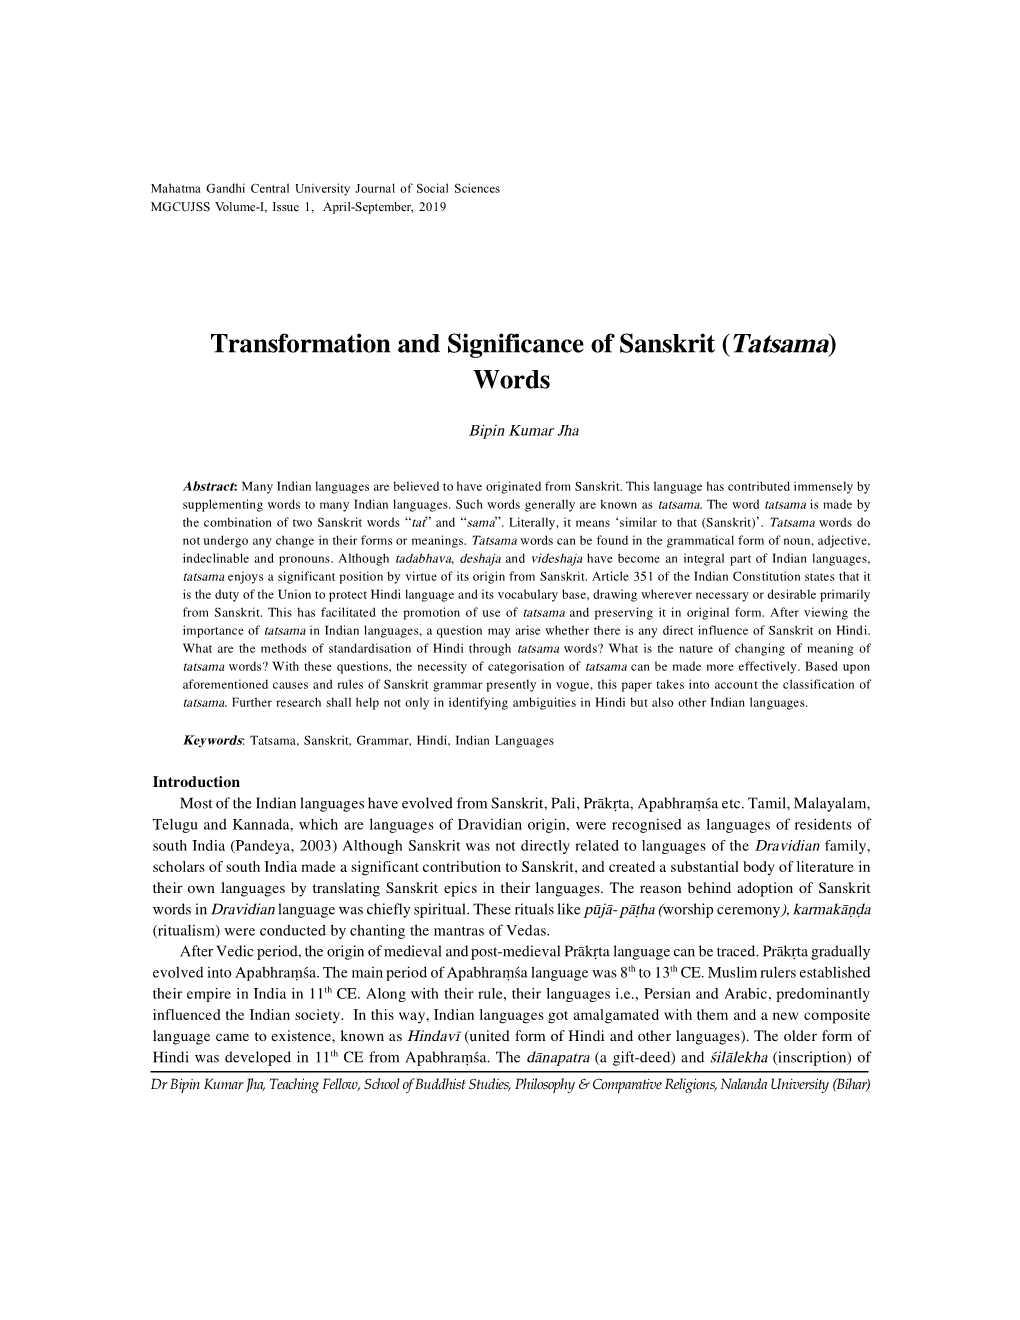 Transformation and Significance of Sanskrit (Tatsama) Words